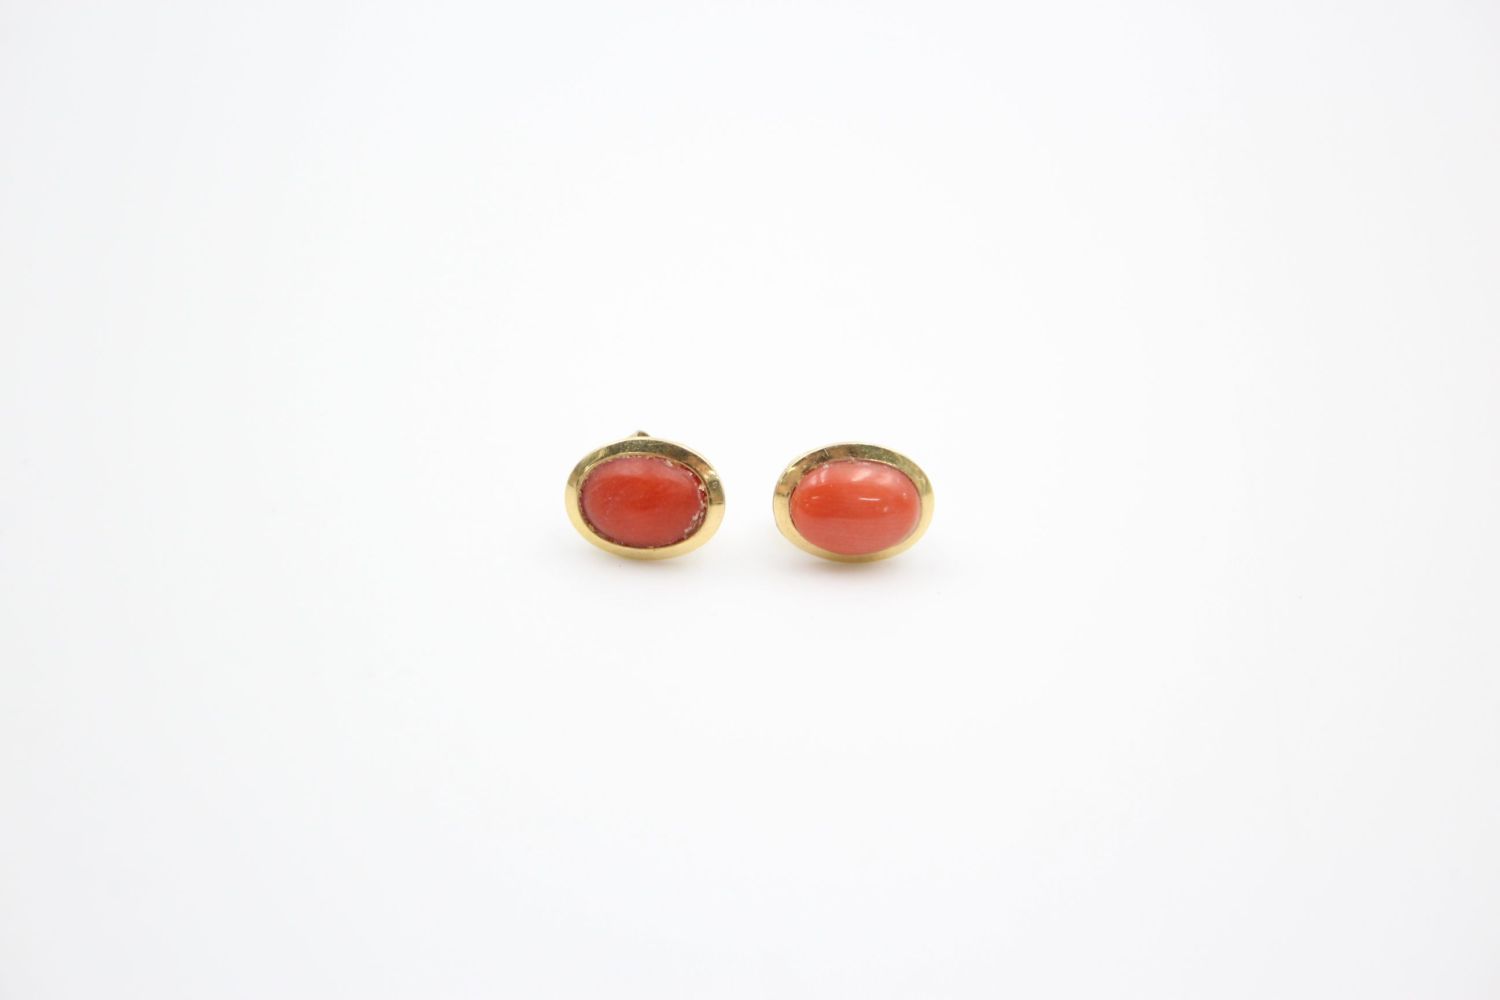 3 x 9ct gold gemstone stud earrings 2.9 grams gross - Image 5 of 11